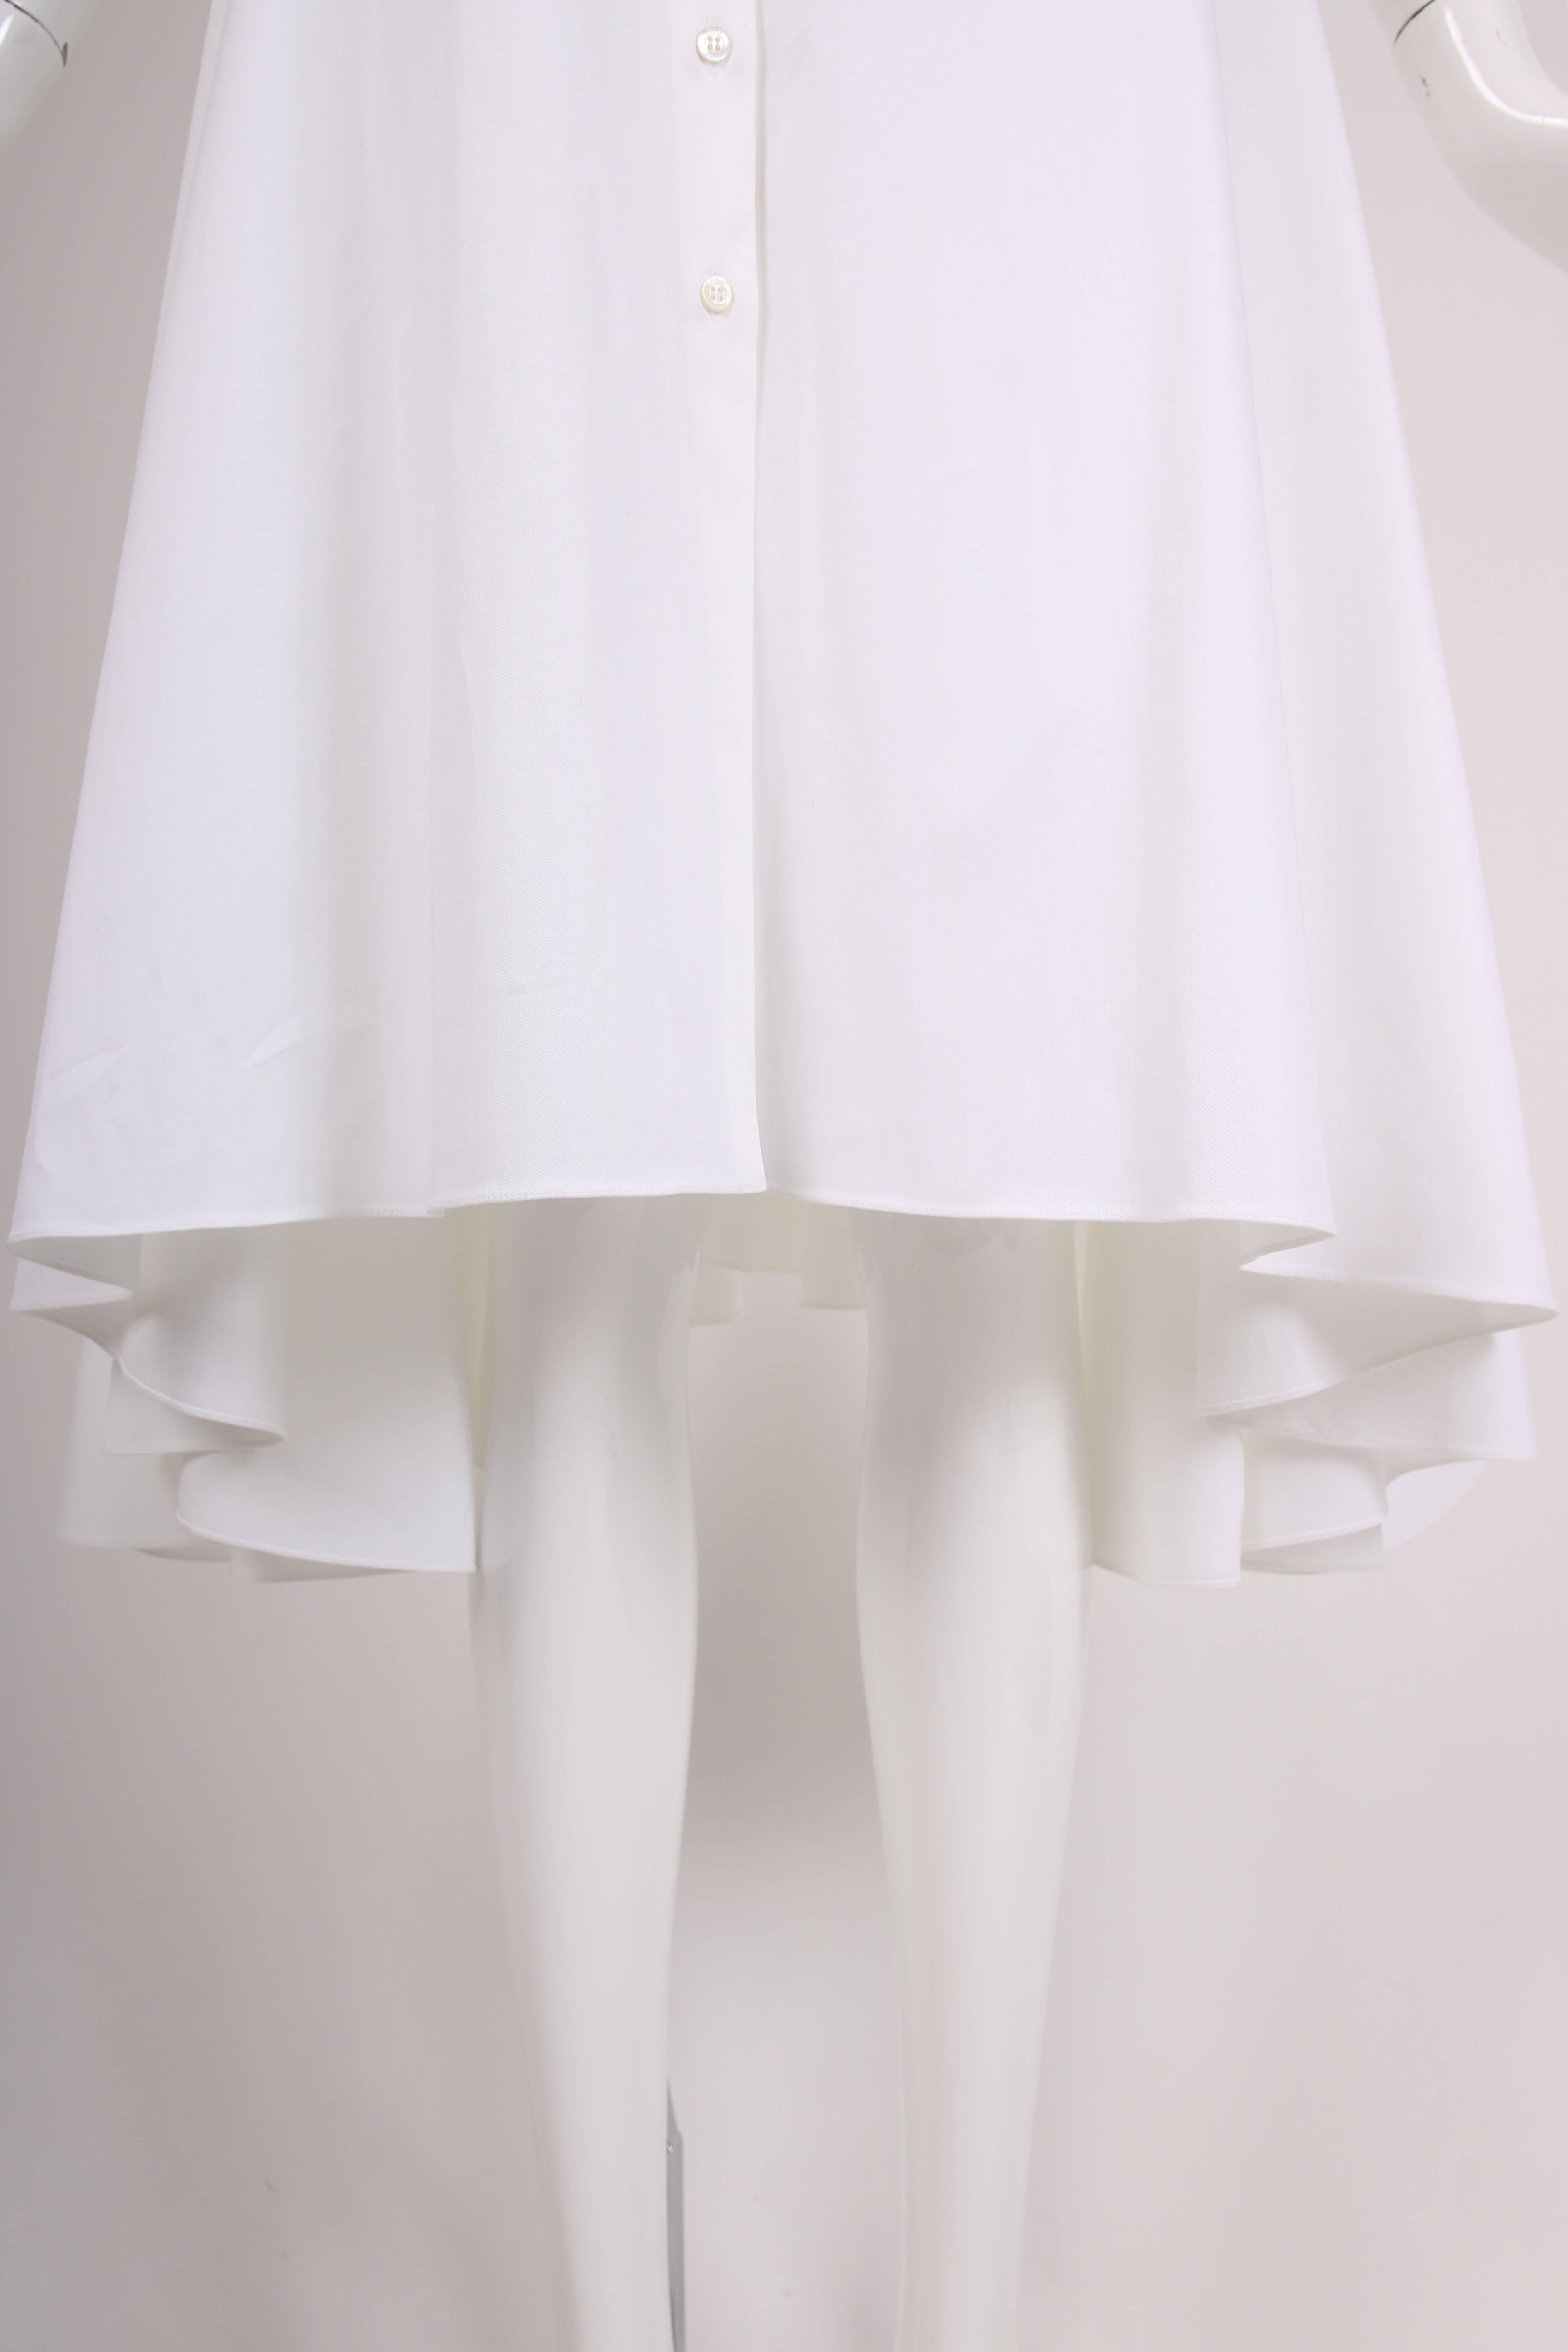 Women's 2013 Christian Dior by Raf Simons White Sleeveless Day Dress w/High-Low Hem